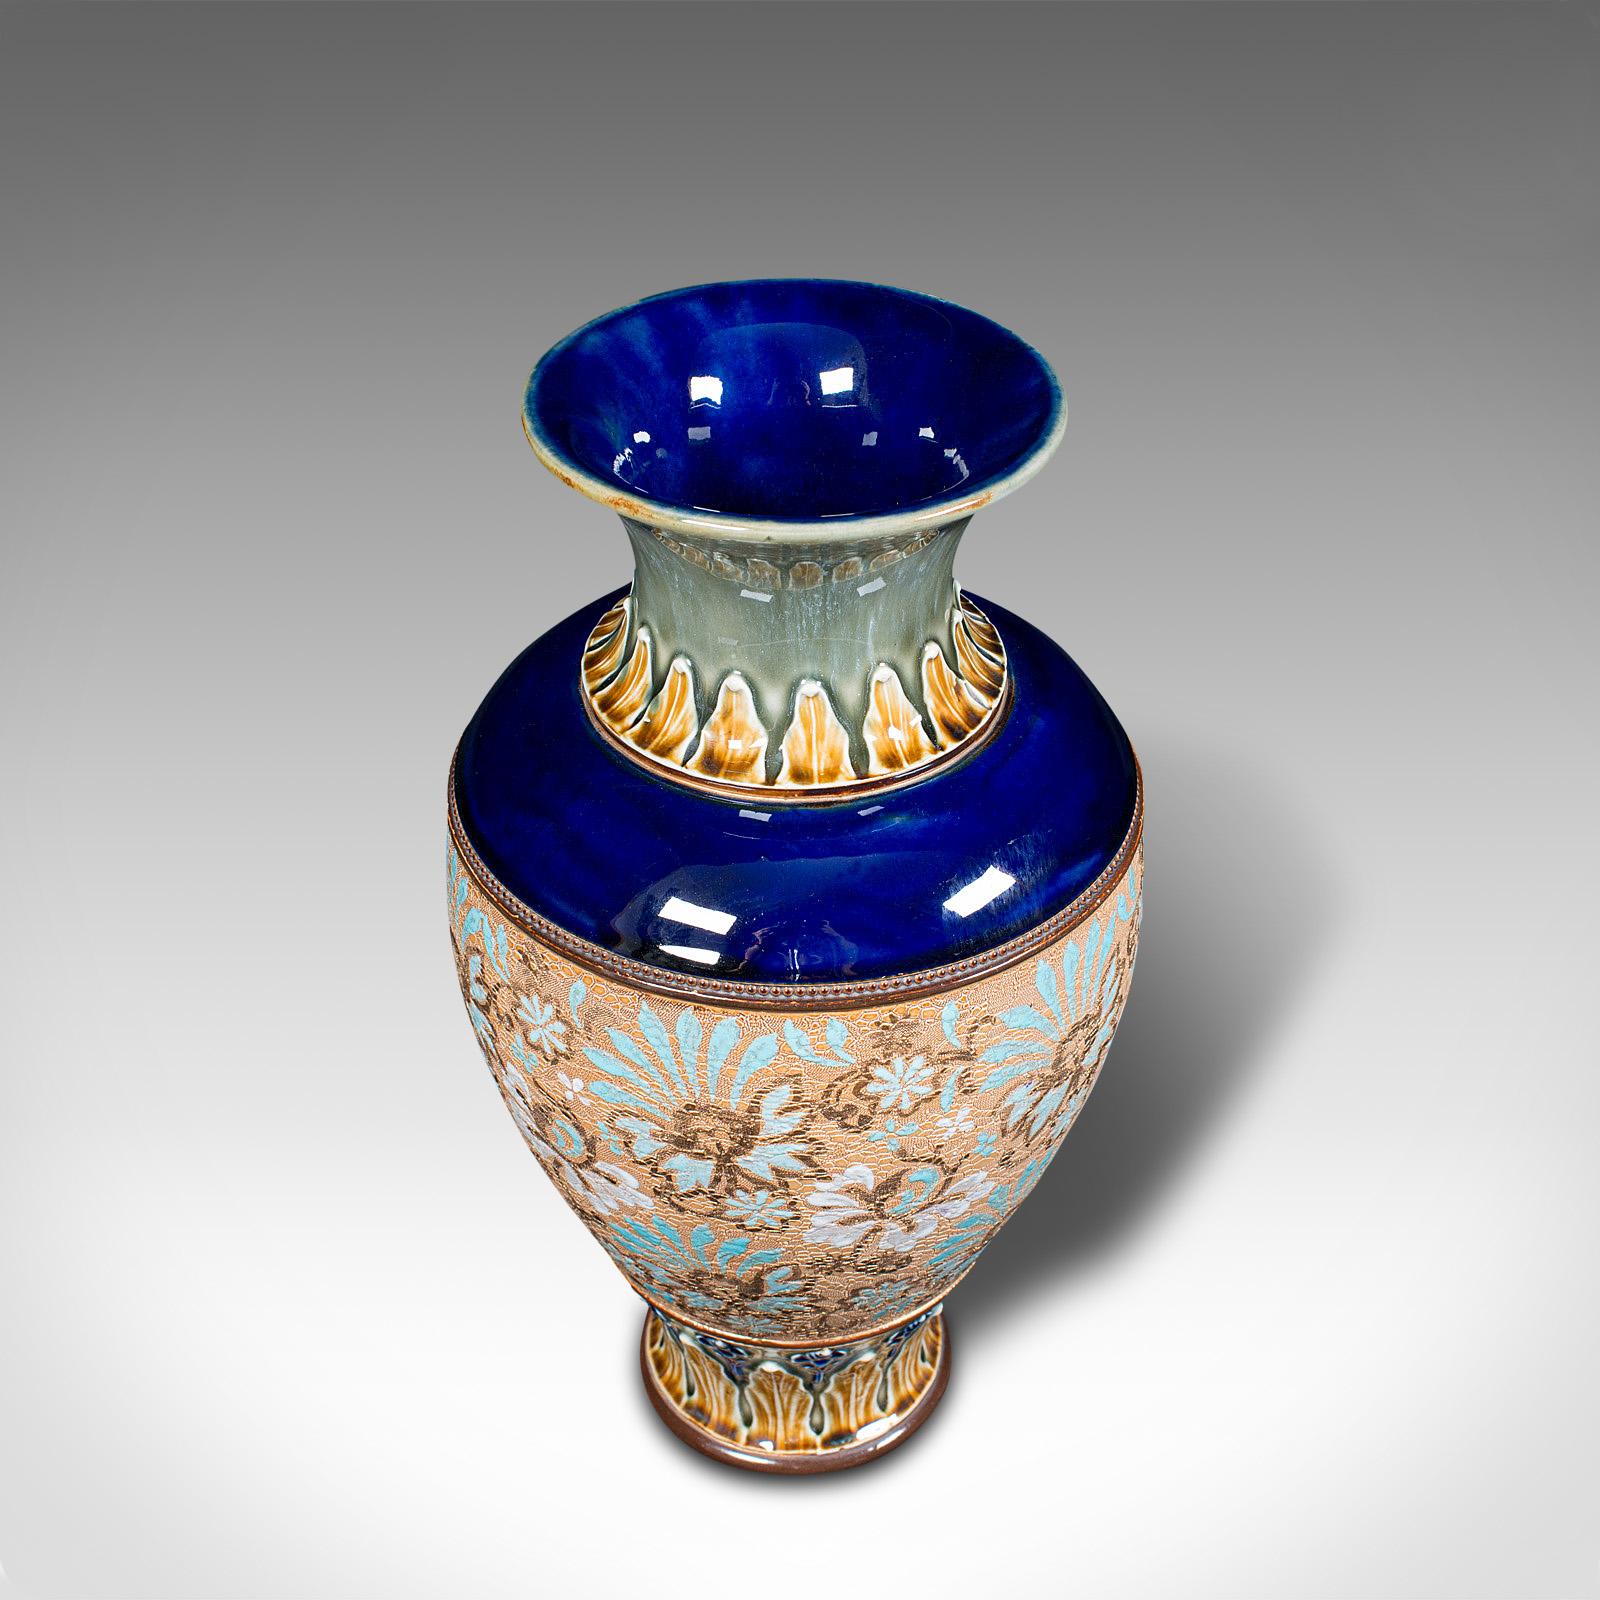 20th Century Antique Decorative Vase, English, Ceramic, Display, Art Nouveau, Edwardian, 1910